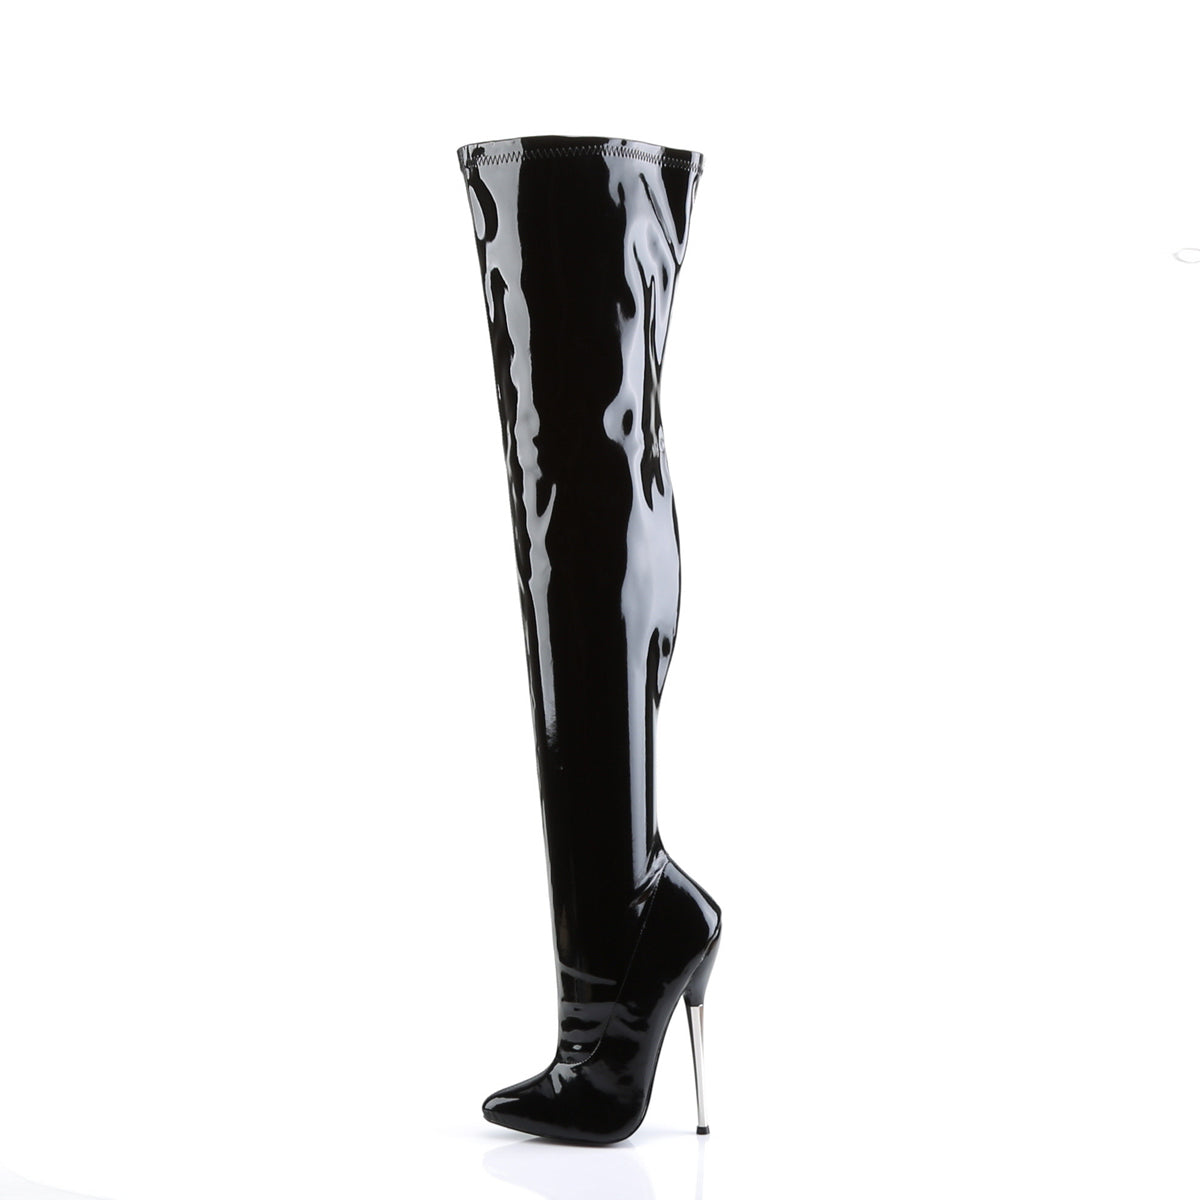 Devious Womens Boots DAGGER-3000 Blk Stretch Pat